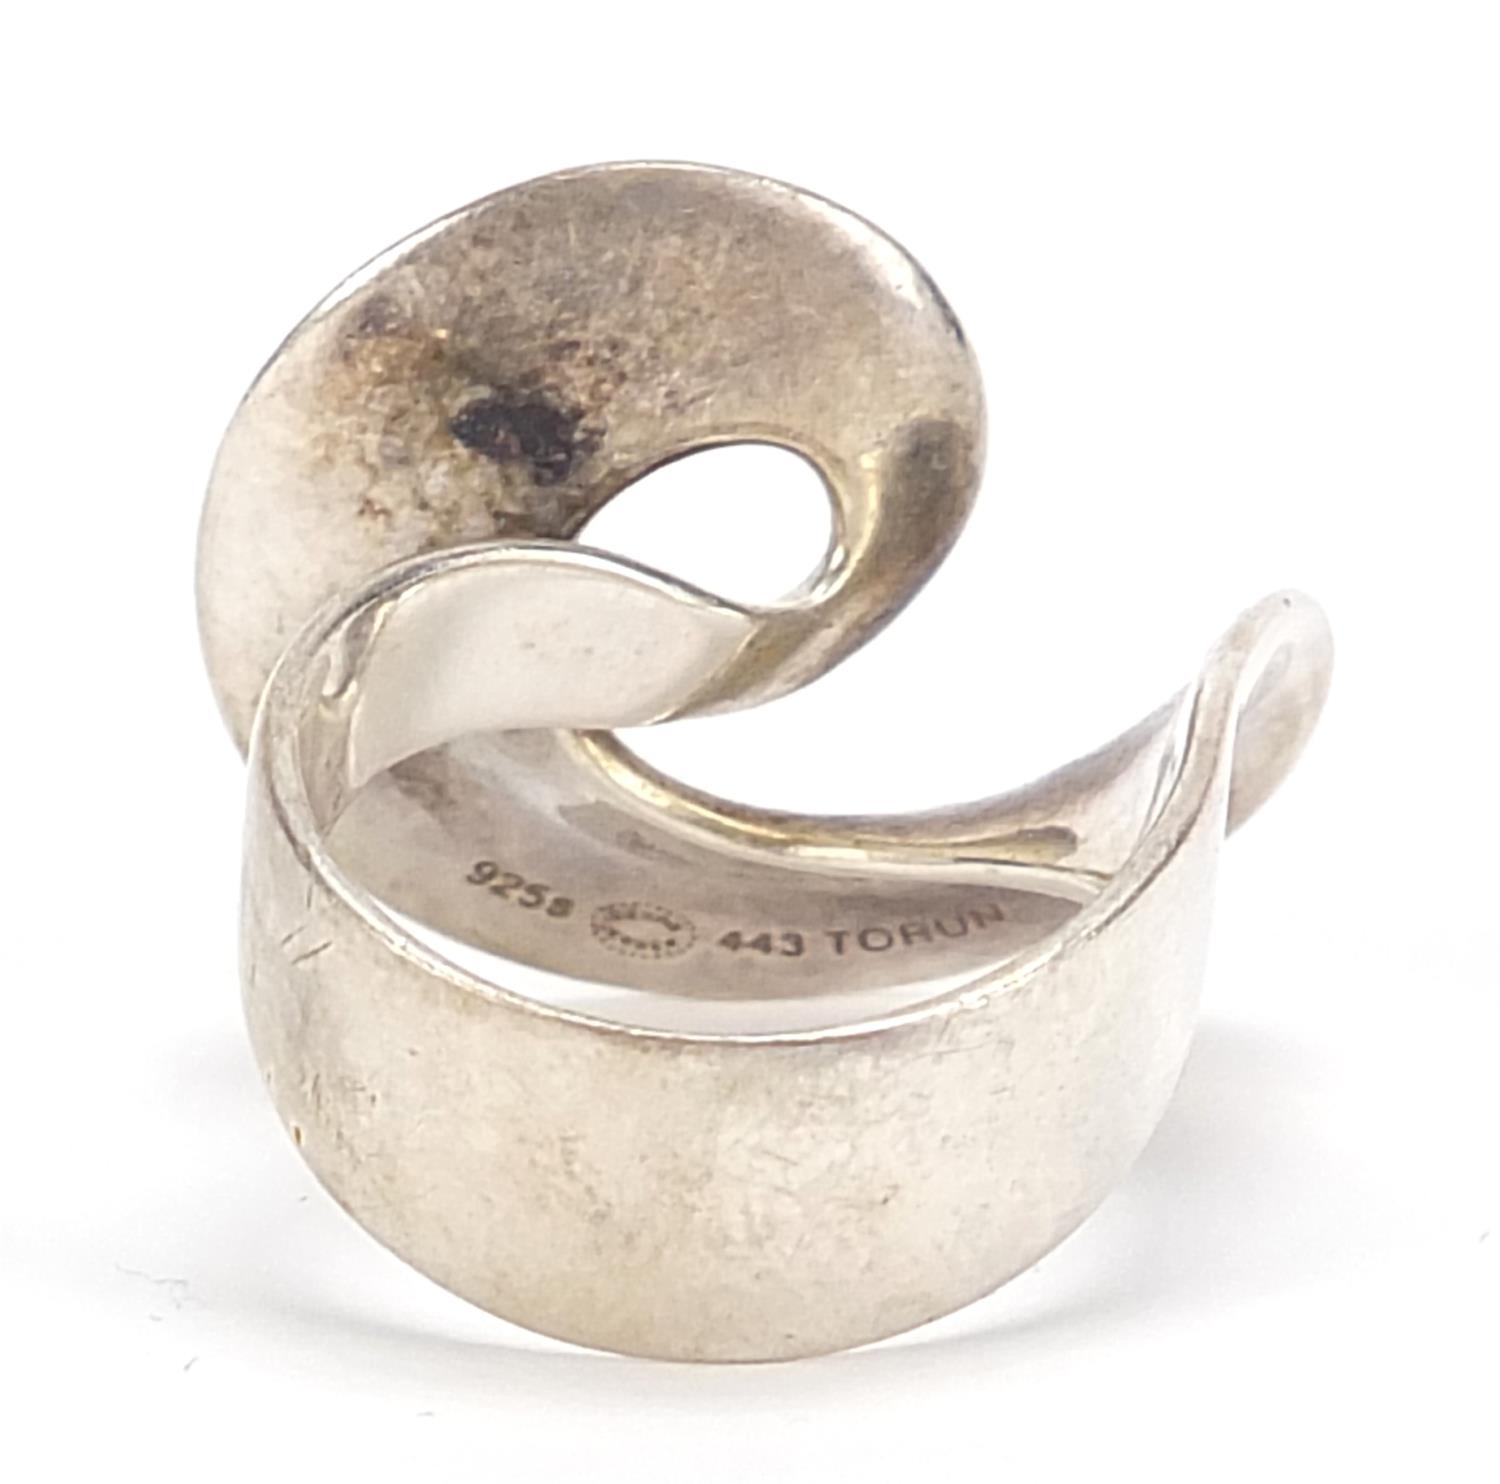 Viviana Torun Bulow-Hube for Georg Jensen, Danish 925S silver ring, number 443 with box, size N, 9. - Image 4 of 7